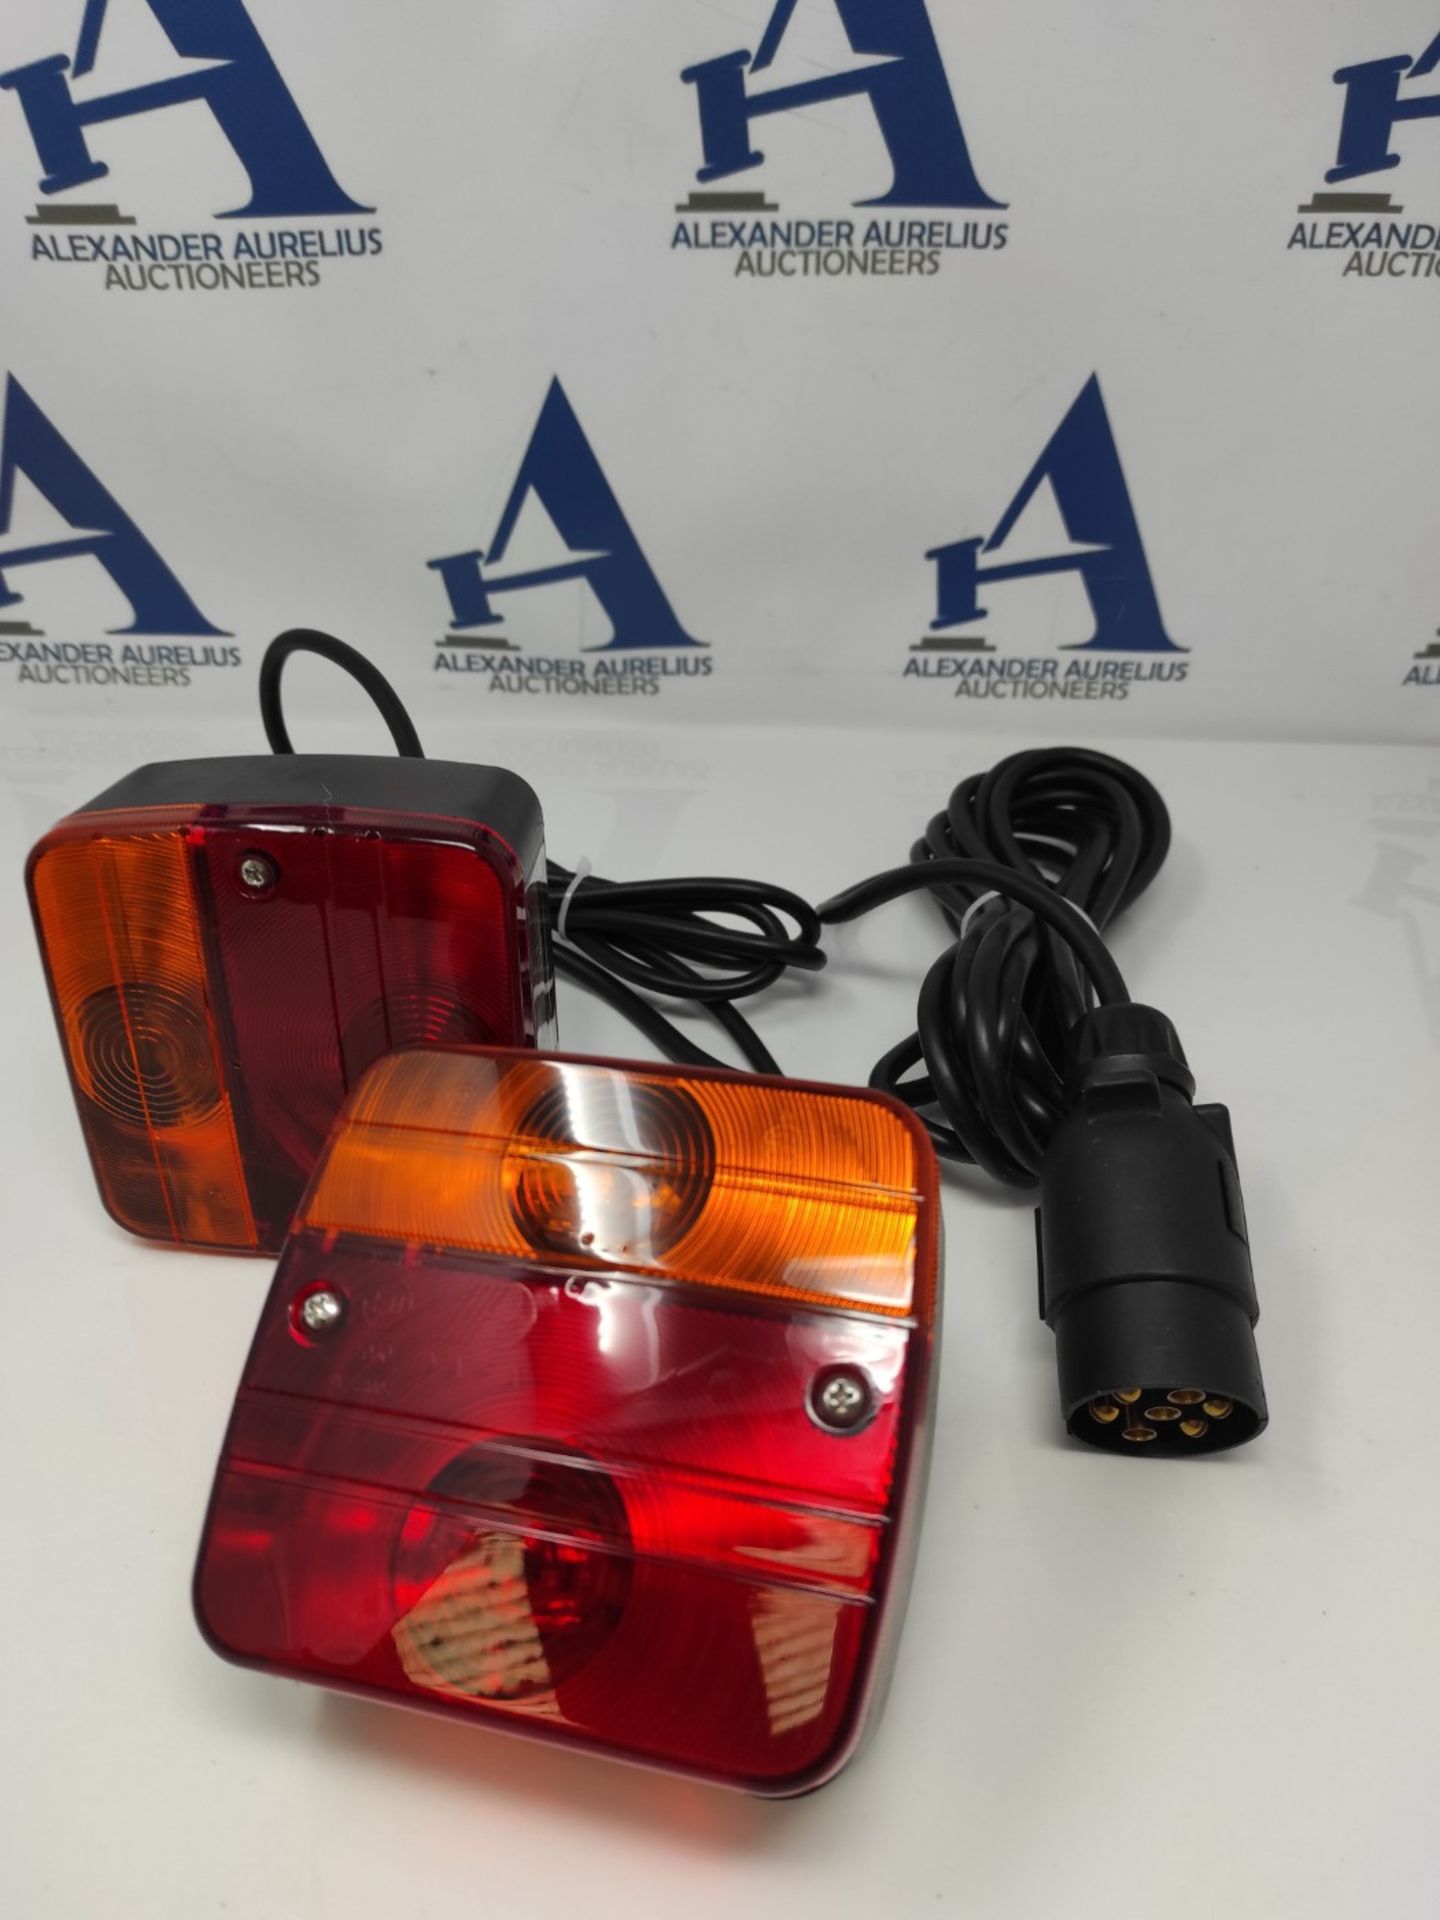 Spotlight - Trailer signal kit - Rear signal light kit - Distance between lights: 1.5m - Image 2 of 2